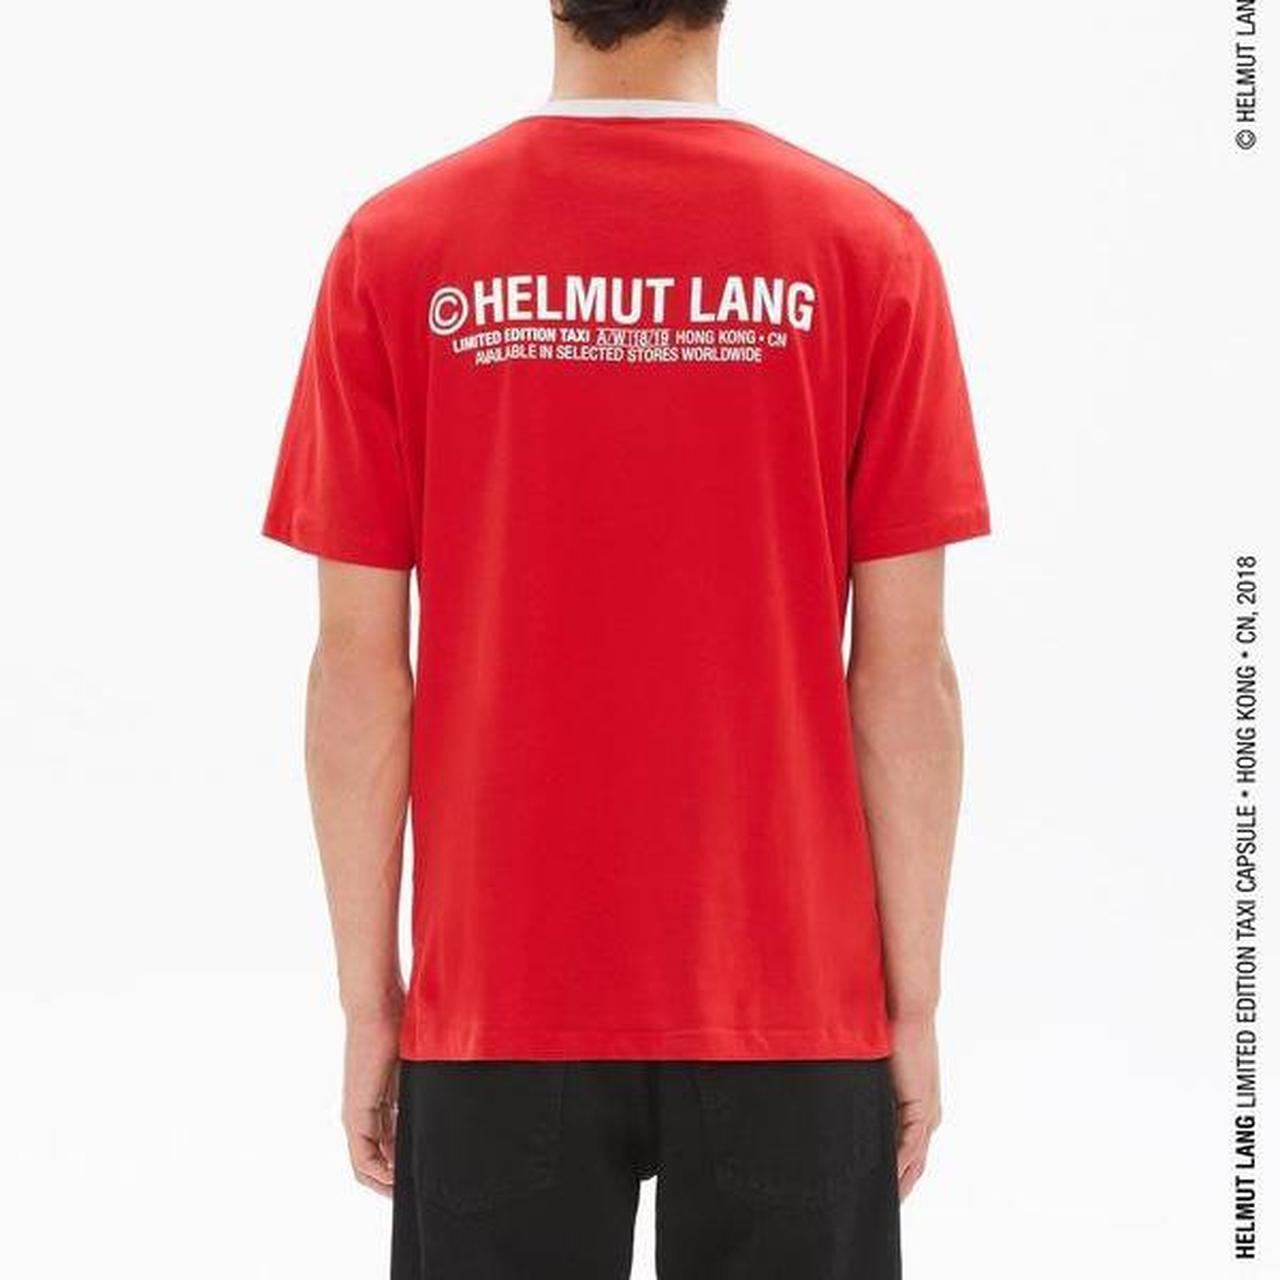 Helmut Lang Taxi Shirt in red , #helmutlang